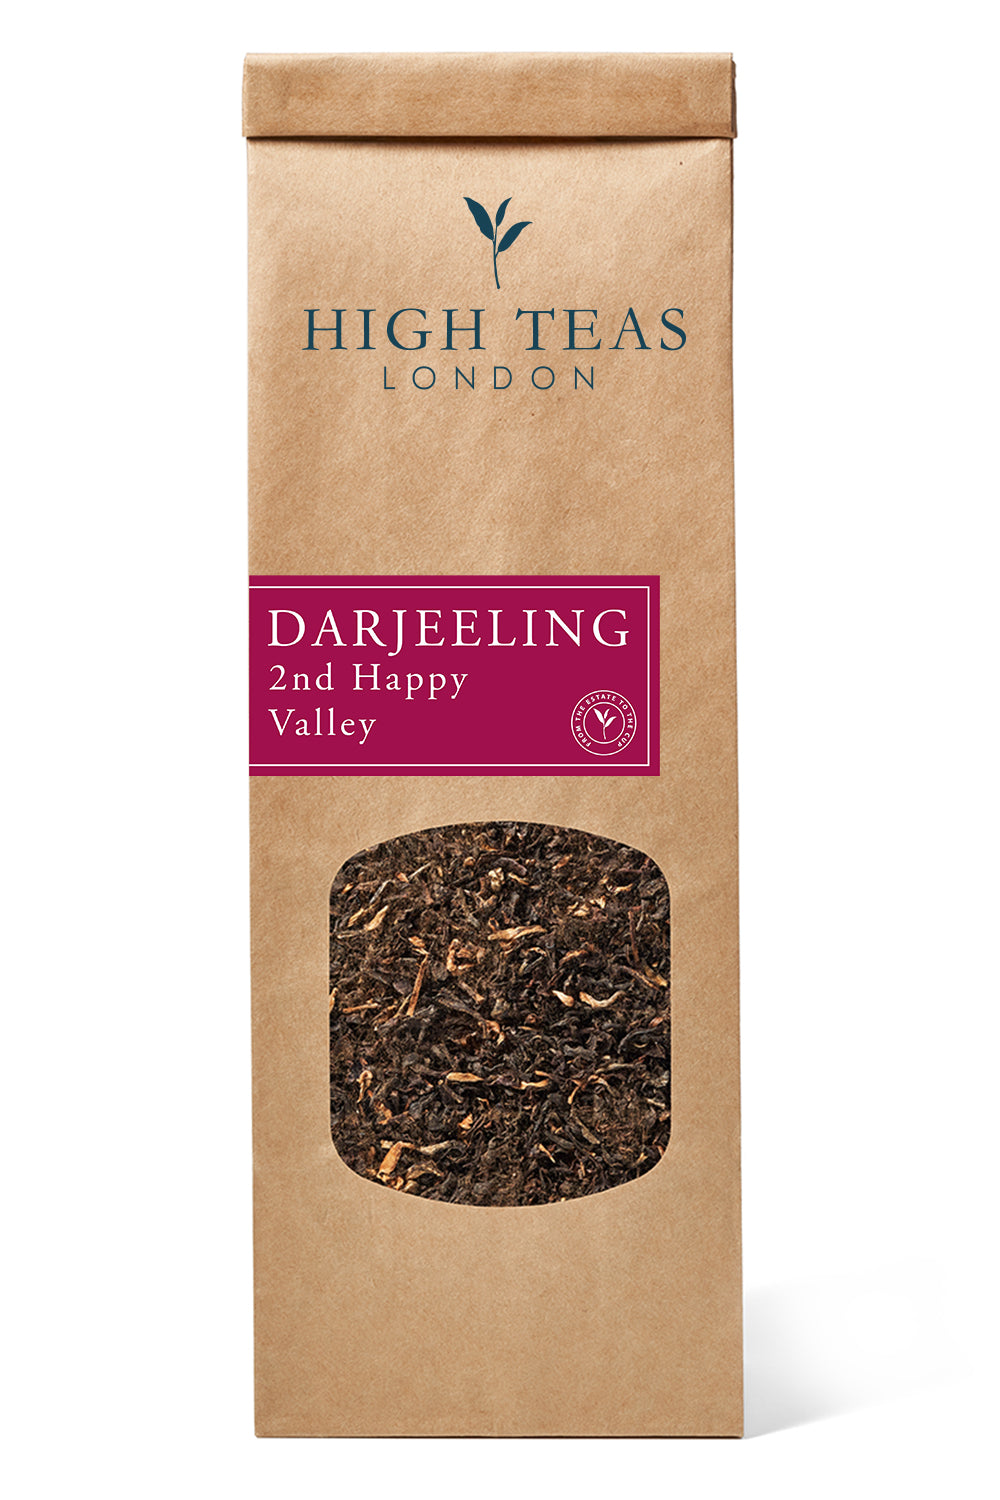 Darjeeling 2nd Happy Valley FTGFOP1-50g-Loose Leaf Tea-High Teas